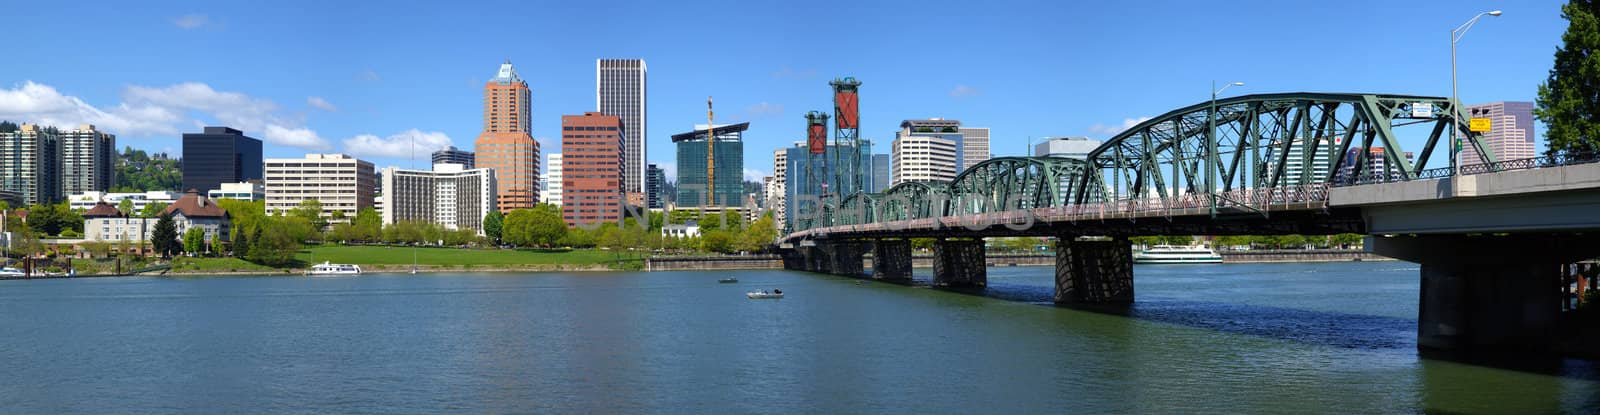 Portland Oregon skyline panorama. by Rigucci